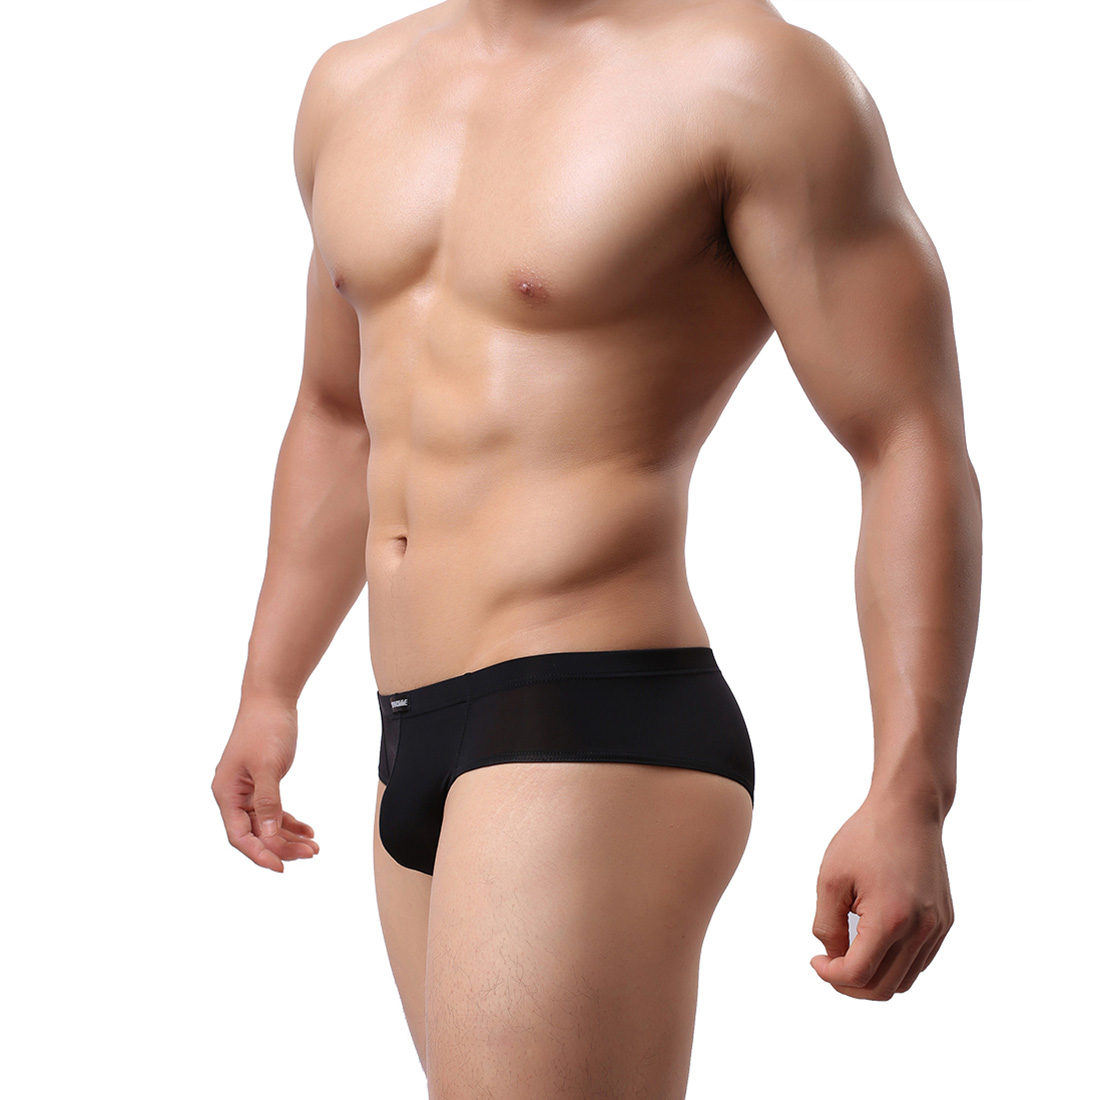 Men's Sexy Lingerie Underwear See-through Briefs Shorts Underpants WH43 Black M